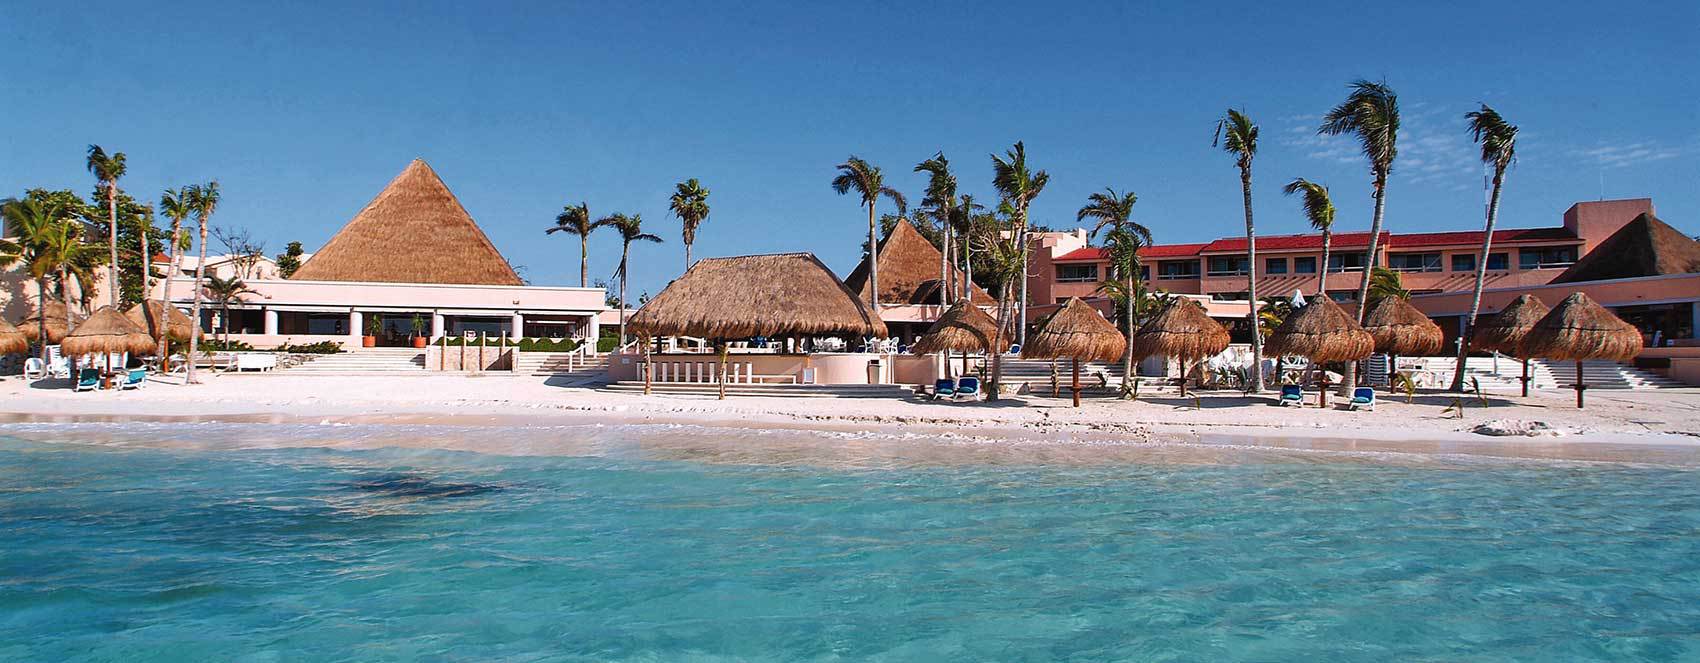 Photo of Omni Puerto Aventuras Beach Resort, Puerto Aventuras, Quintana Roo, Mexico